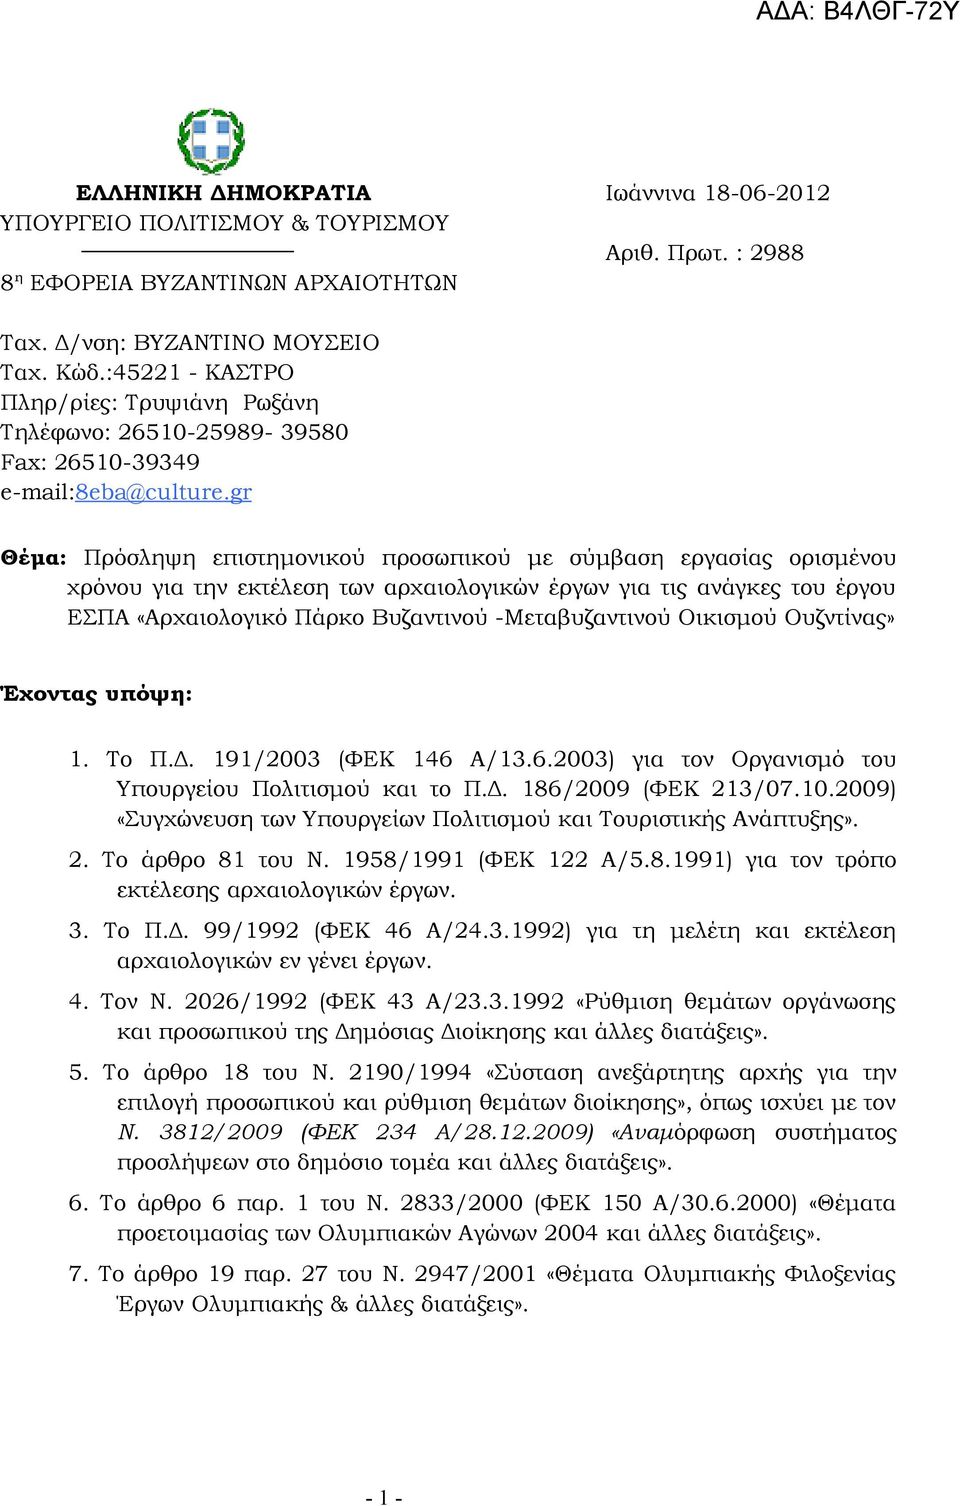 gr Θέμα: Πρόσληψη επιστημονικού προσωπικού με σύμβαση εργασίας ορισμένου χρόνου για την εκτέλεση των αρχαιολογικών έργων για τις ανάγκες του έργου ΕΣΠΑ «Αρχαιολογικό Πάρκο Βυζαντινού -Μεταβυζαντινού